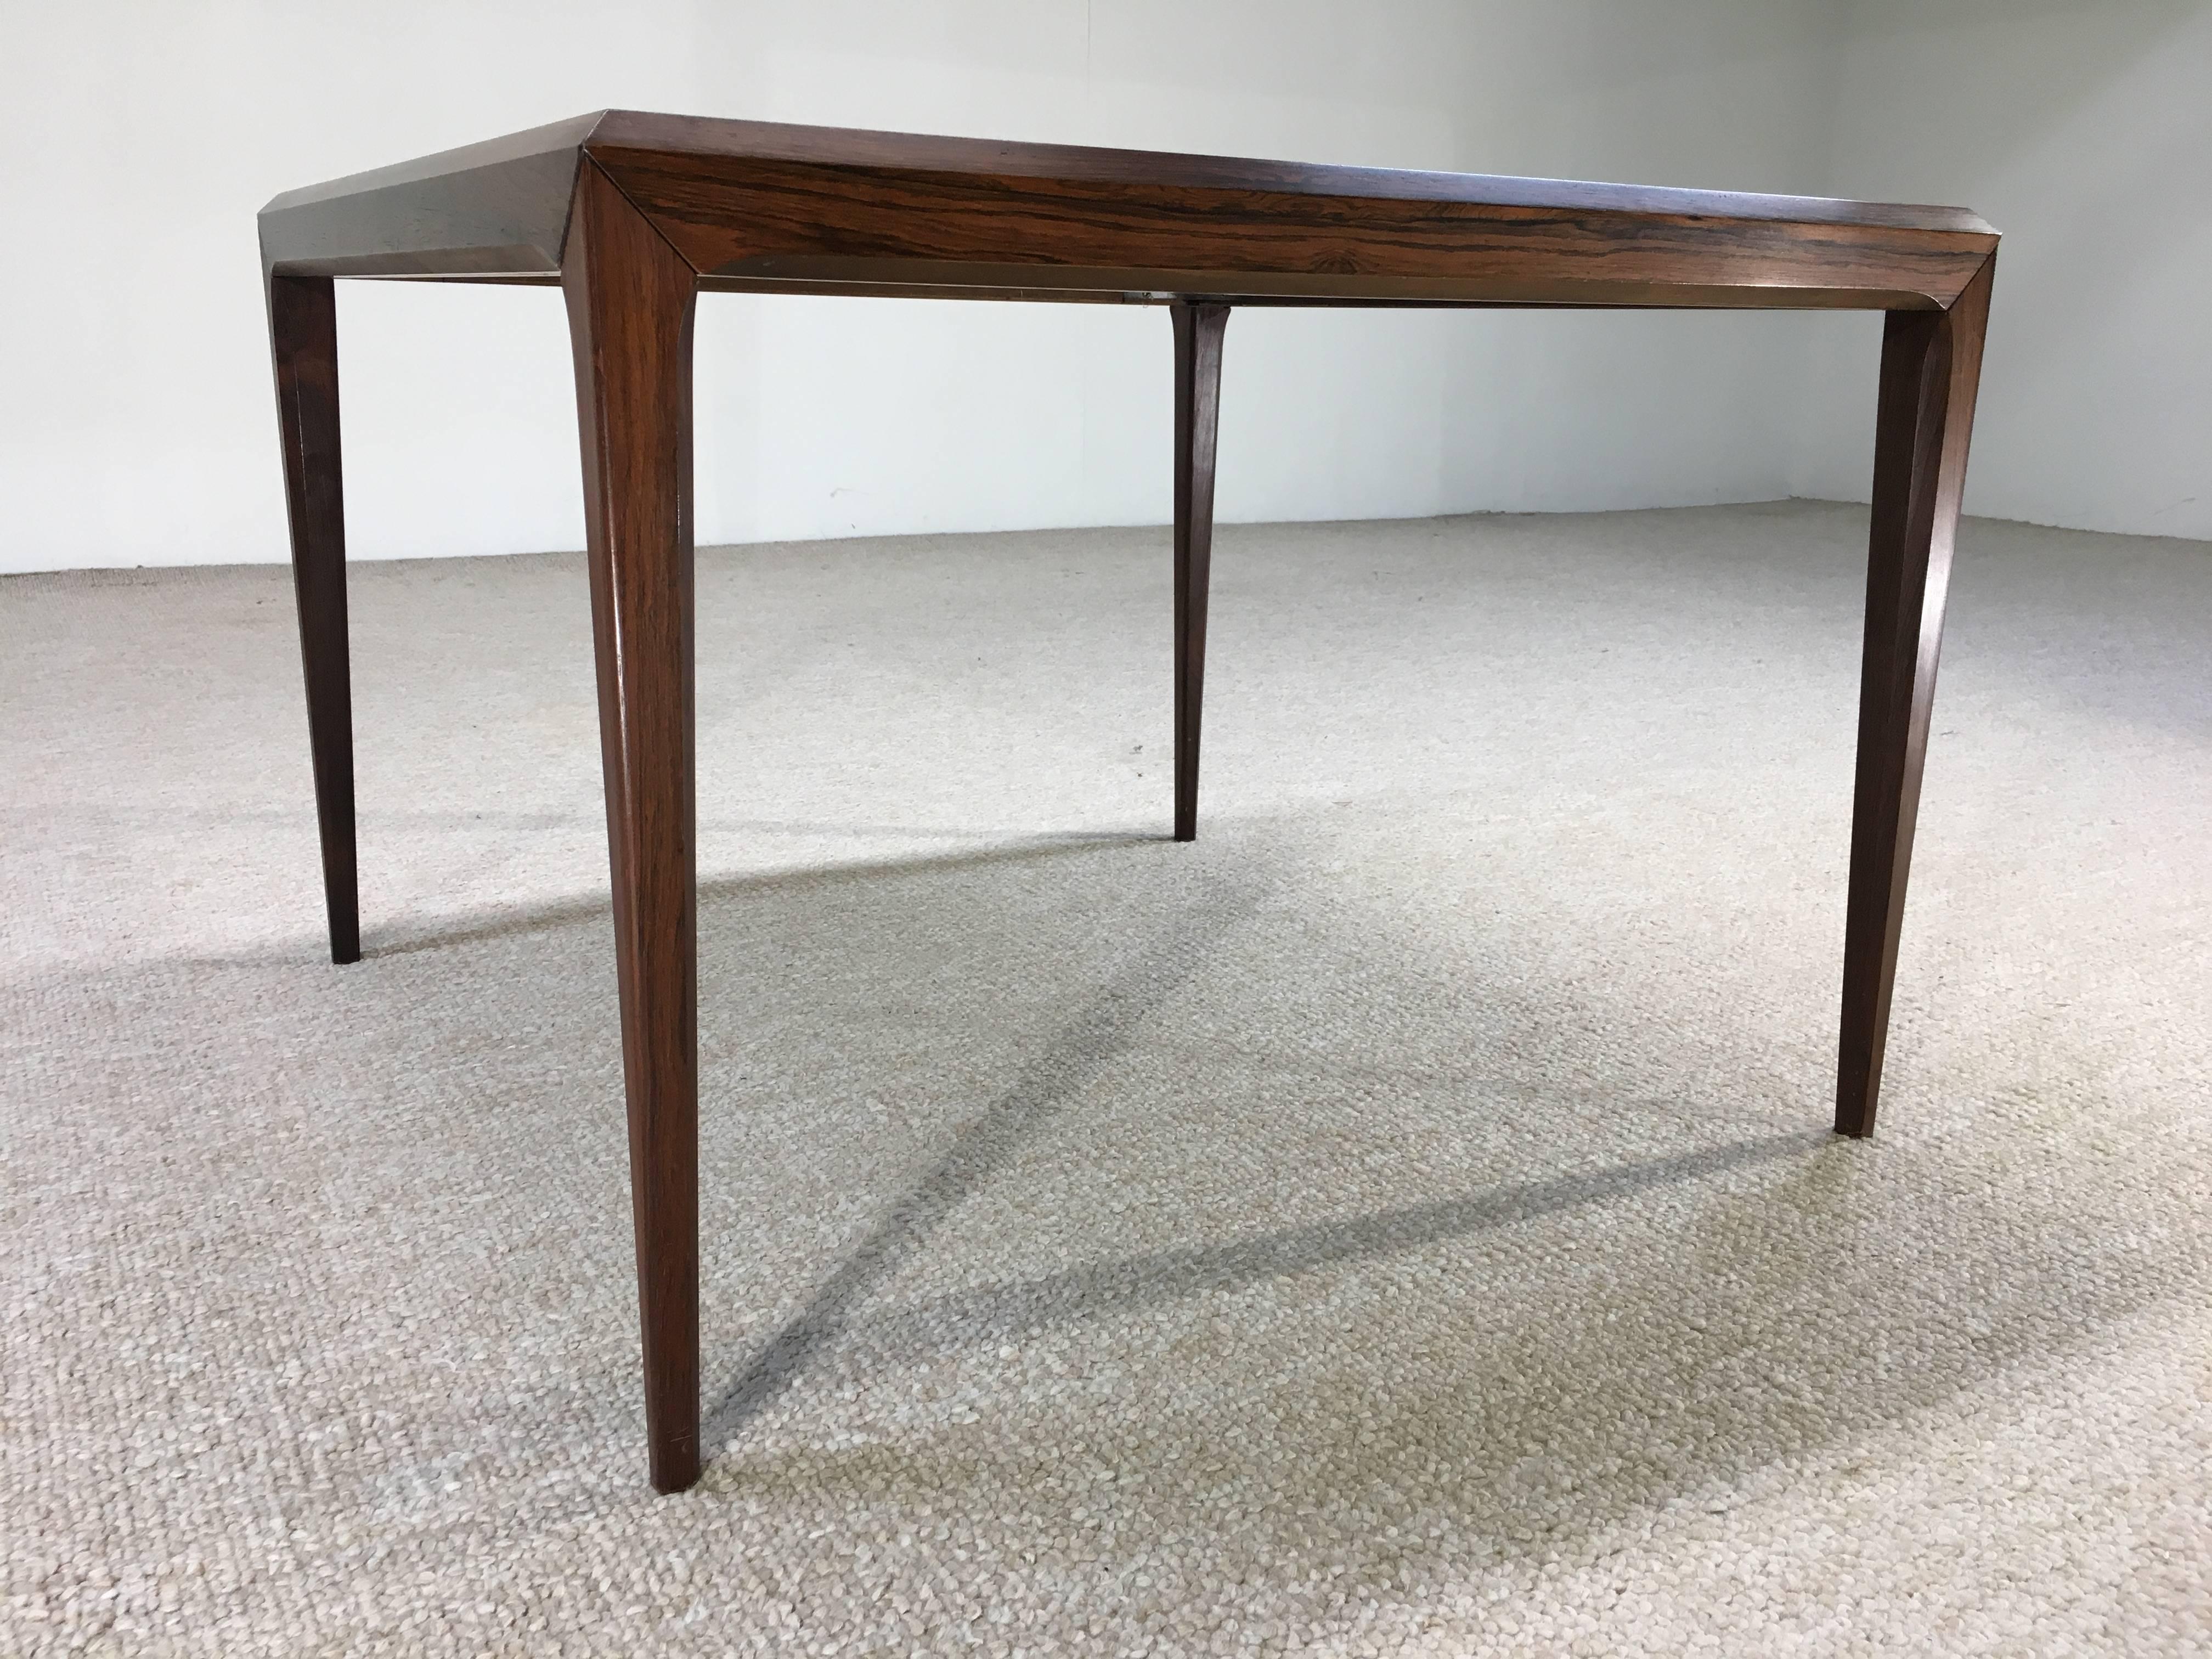 Stunning grain on this sleek example of Scandinavian Modern design by Silkeborg. This table grabs the eye.